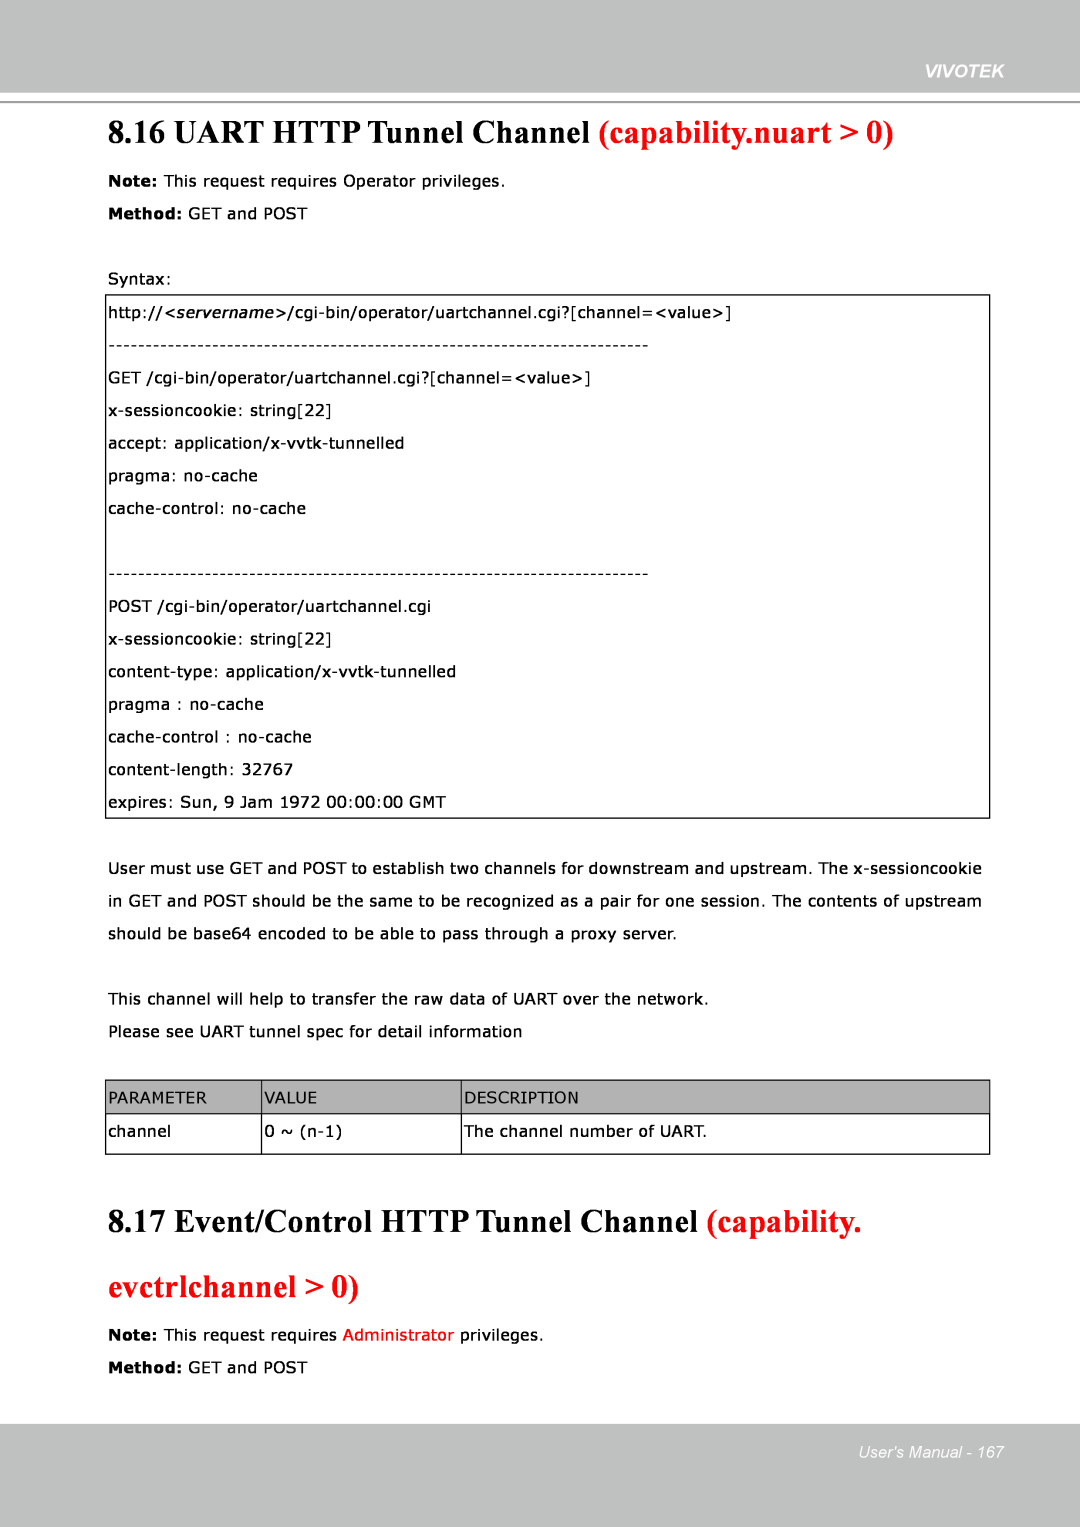 Vivotek IP8151 manual UART HTTP Tunnel Channel capability.nuart, Vivotek, Users Manual 